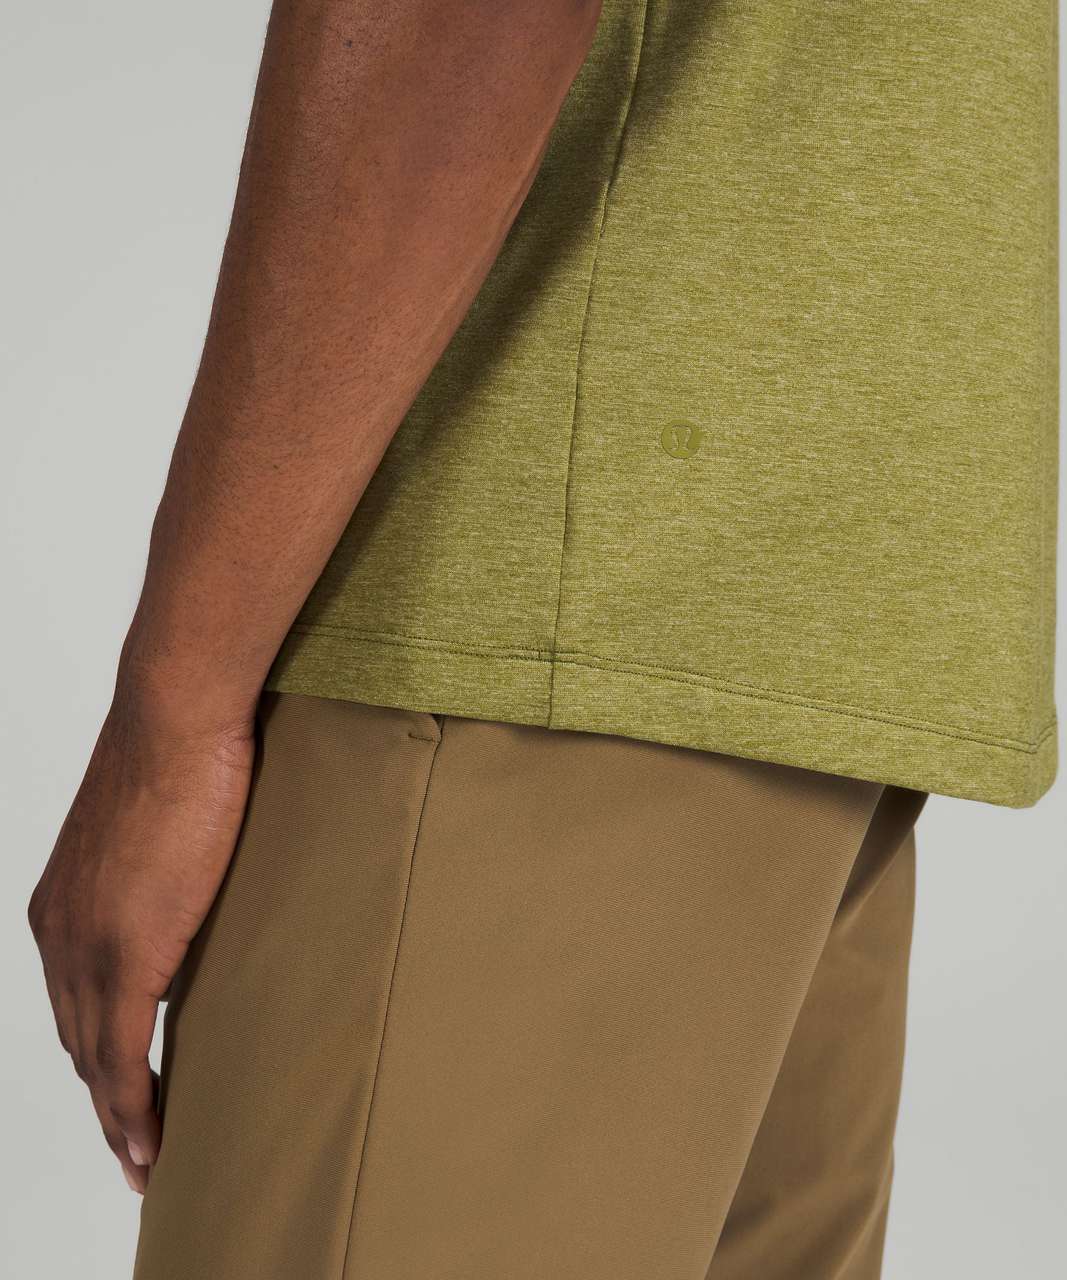 Lululemon Evolution Short Sleeve Polo Shirt - Heathered Juniper Green